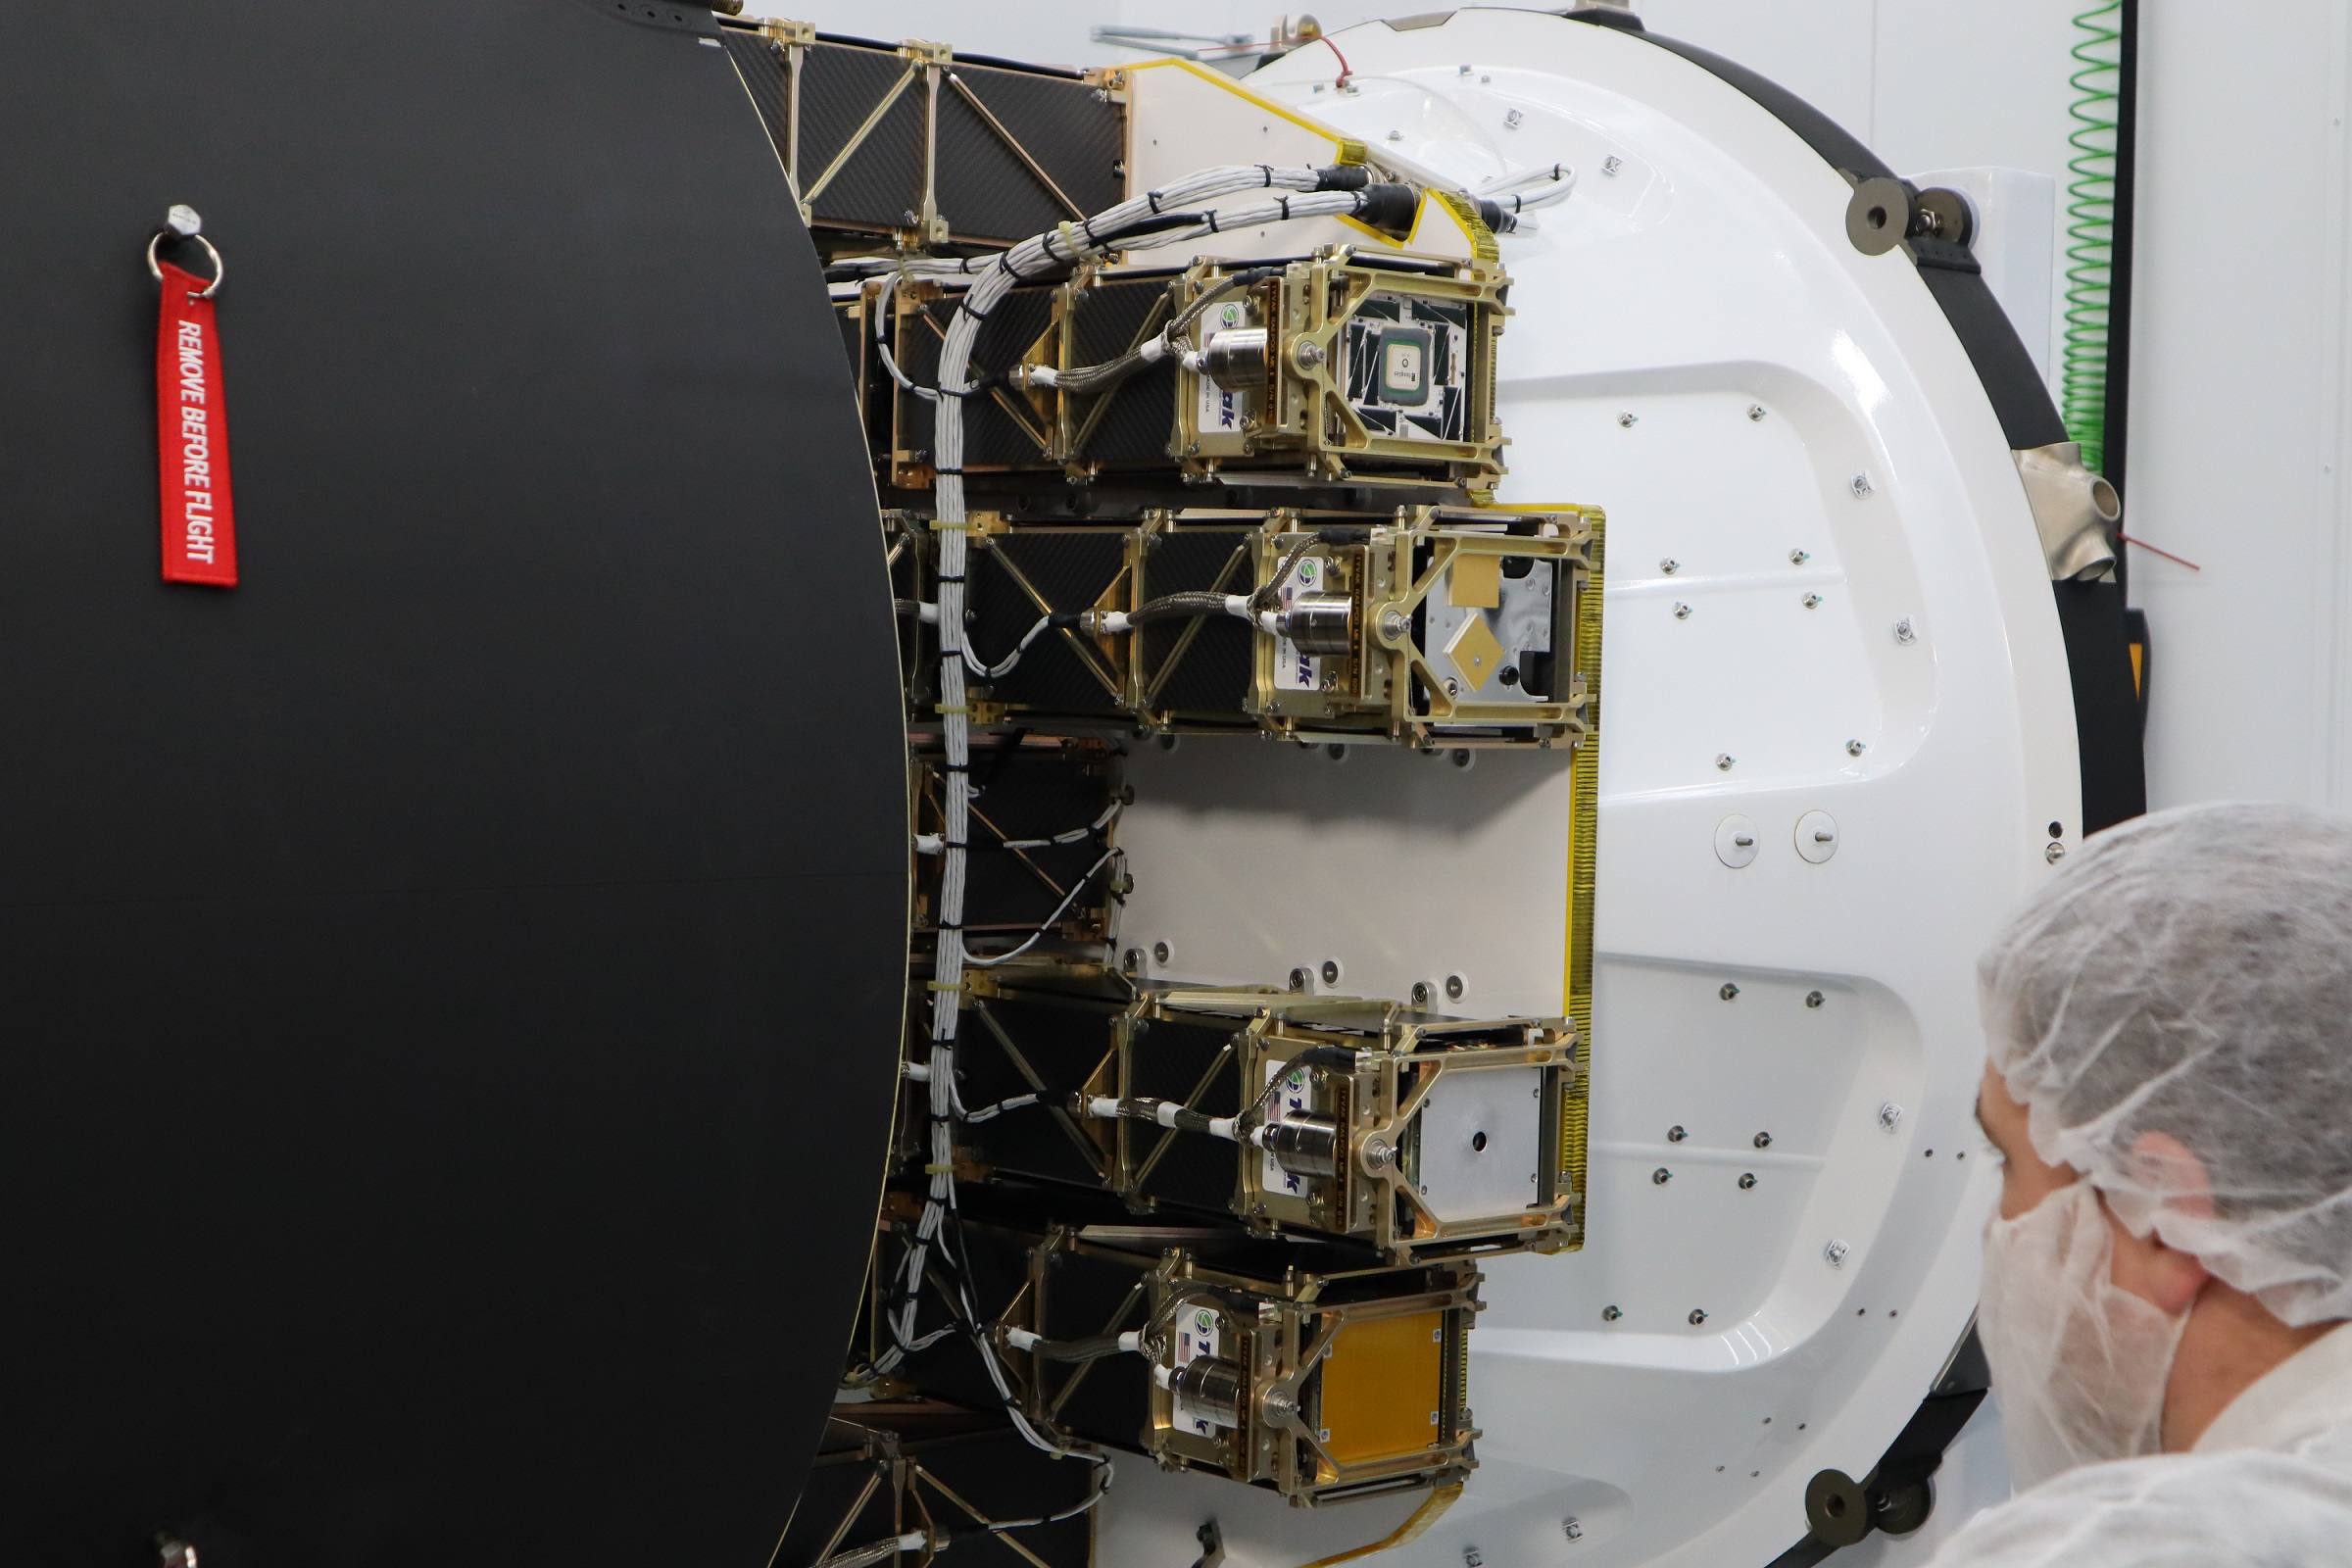 NASA ELaNa-19 mission fairing encapsulation